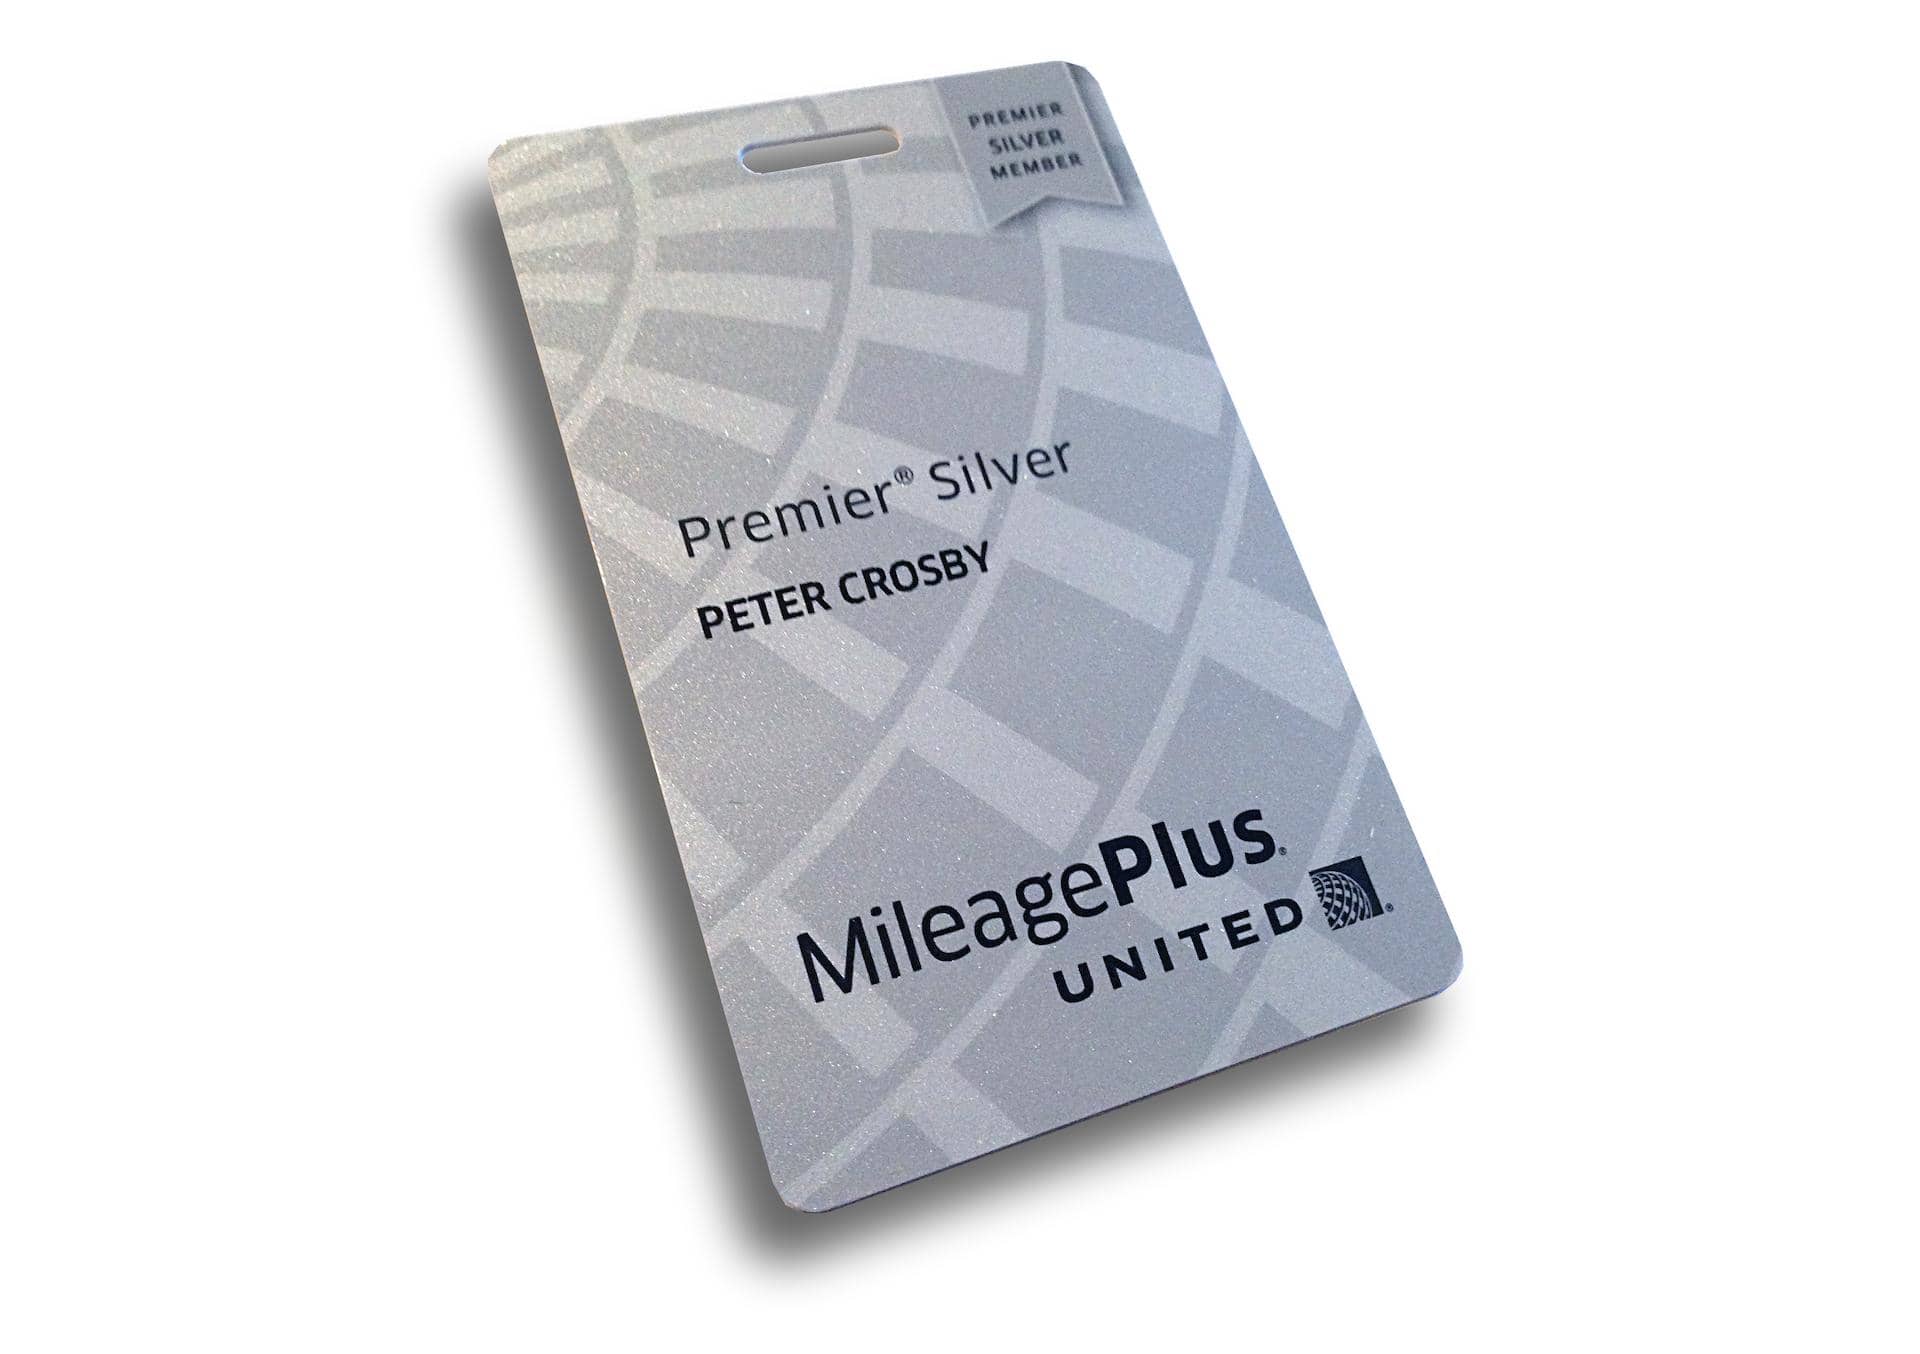 Plebeian no more: United reinstates my “Premier Silver” status.